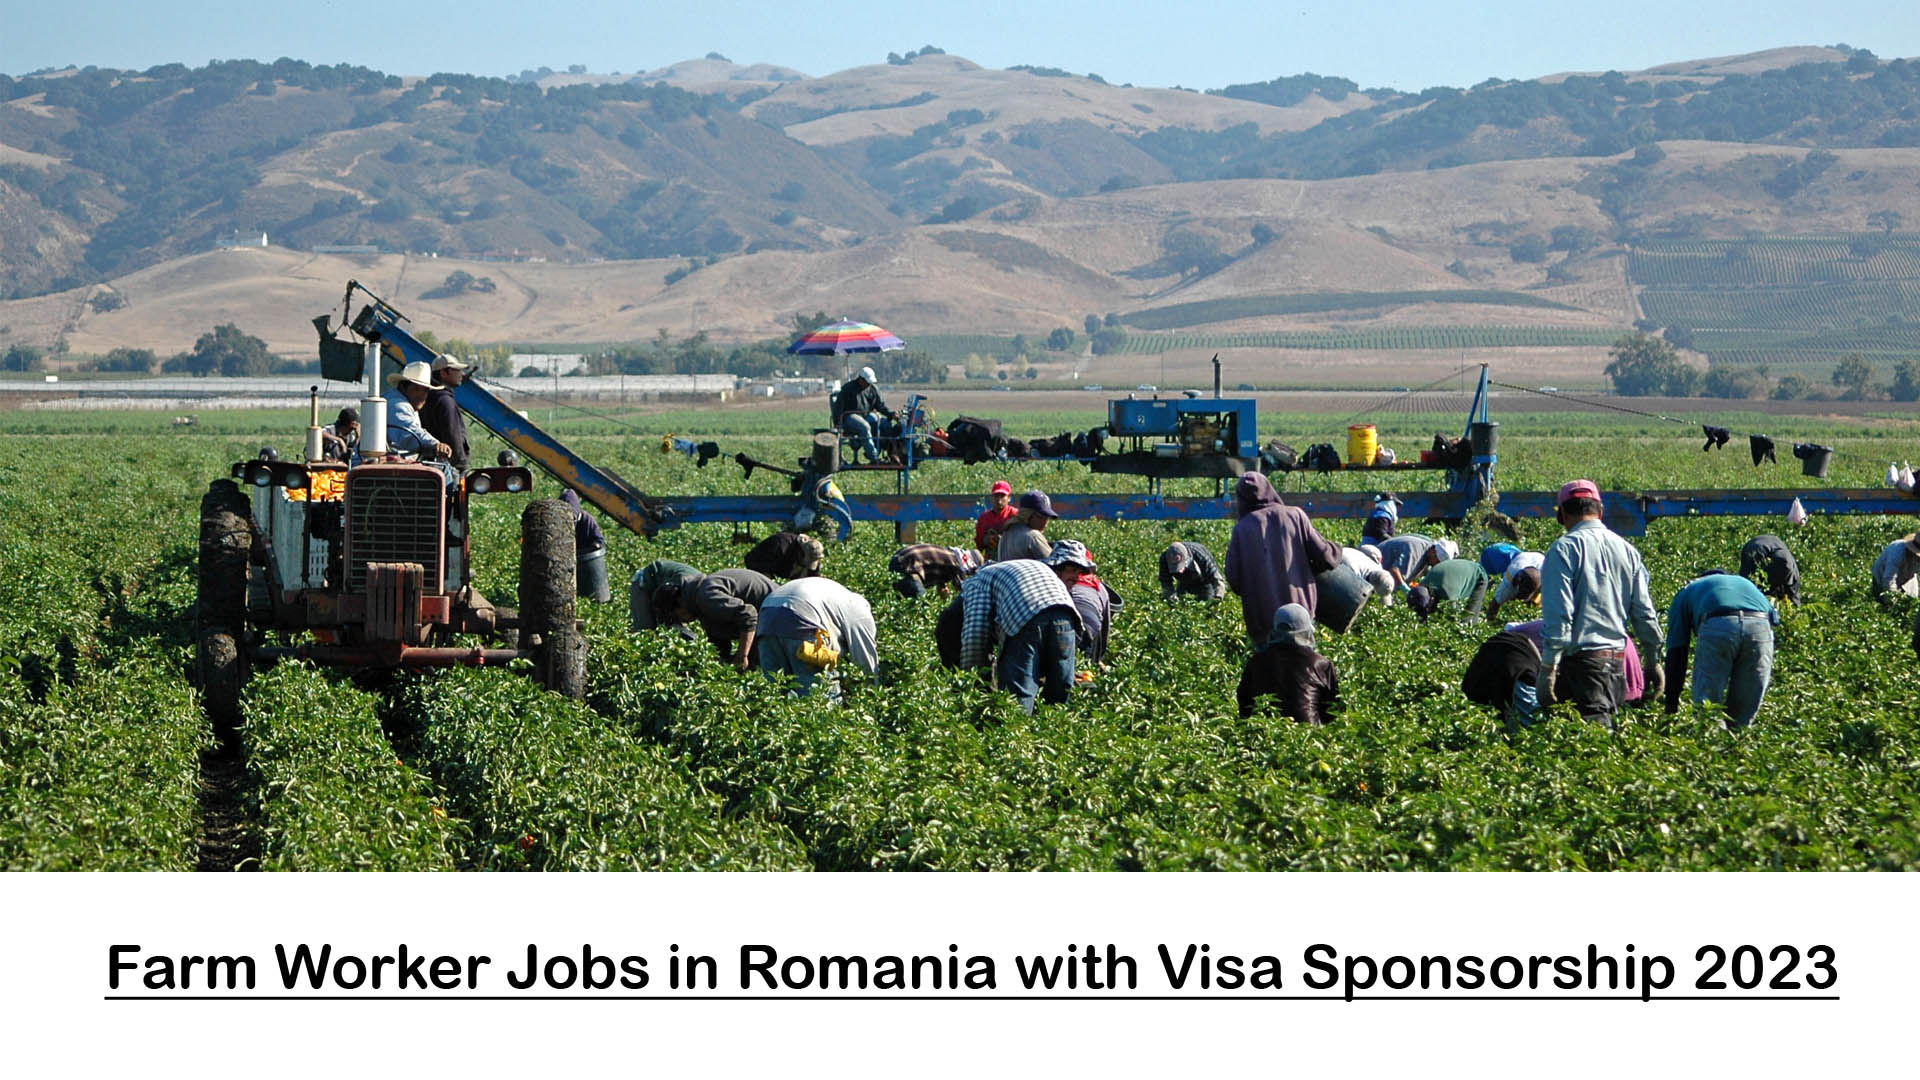 Farm Worker Jobs in Romania with Visa Sponsorship 2023